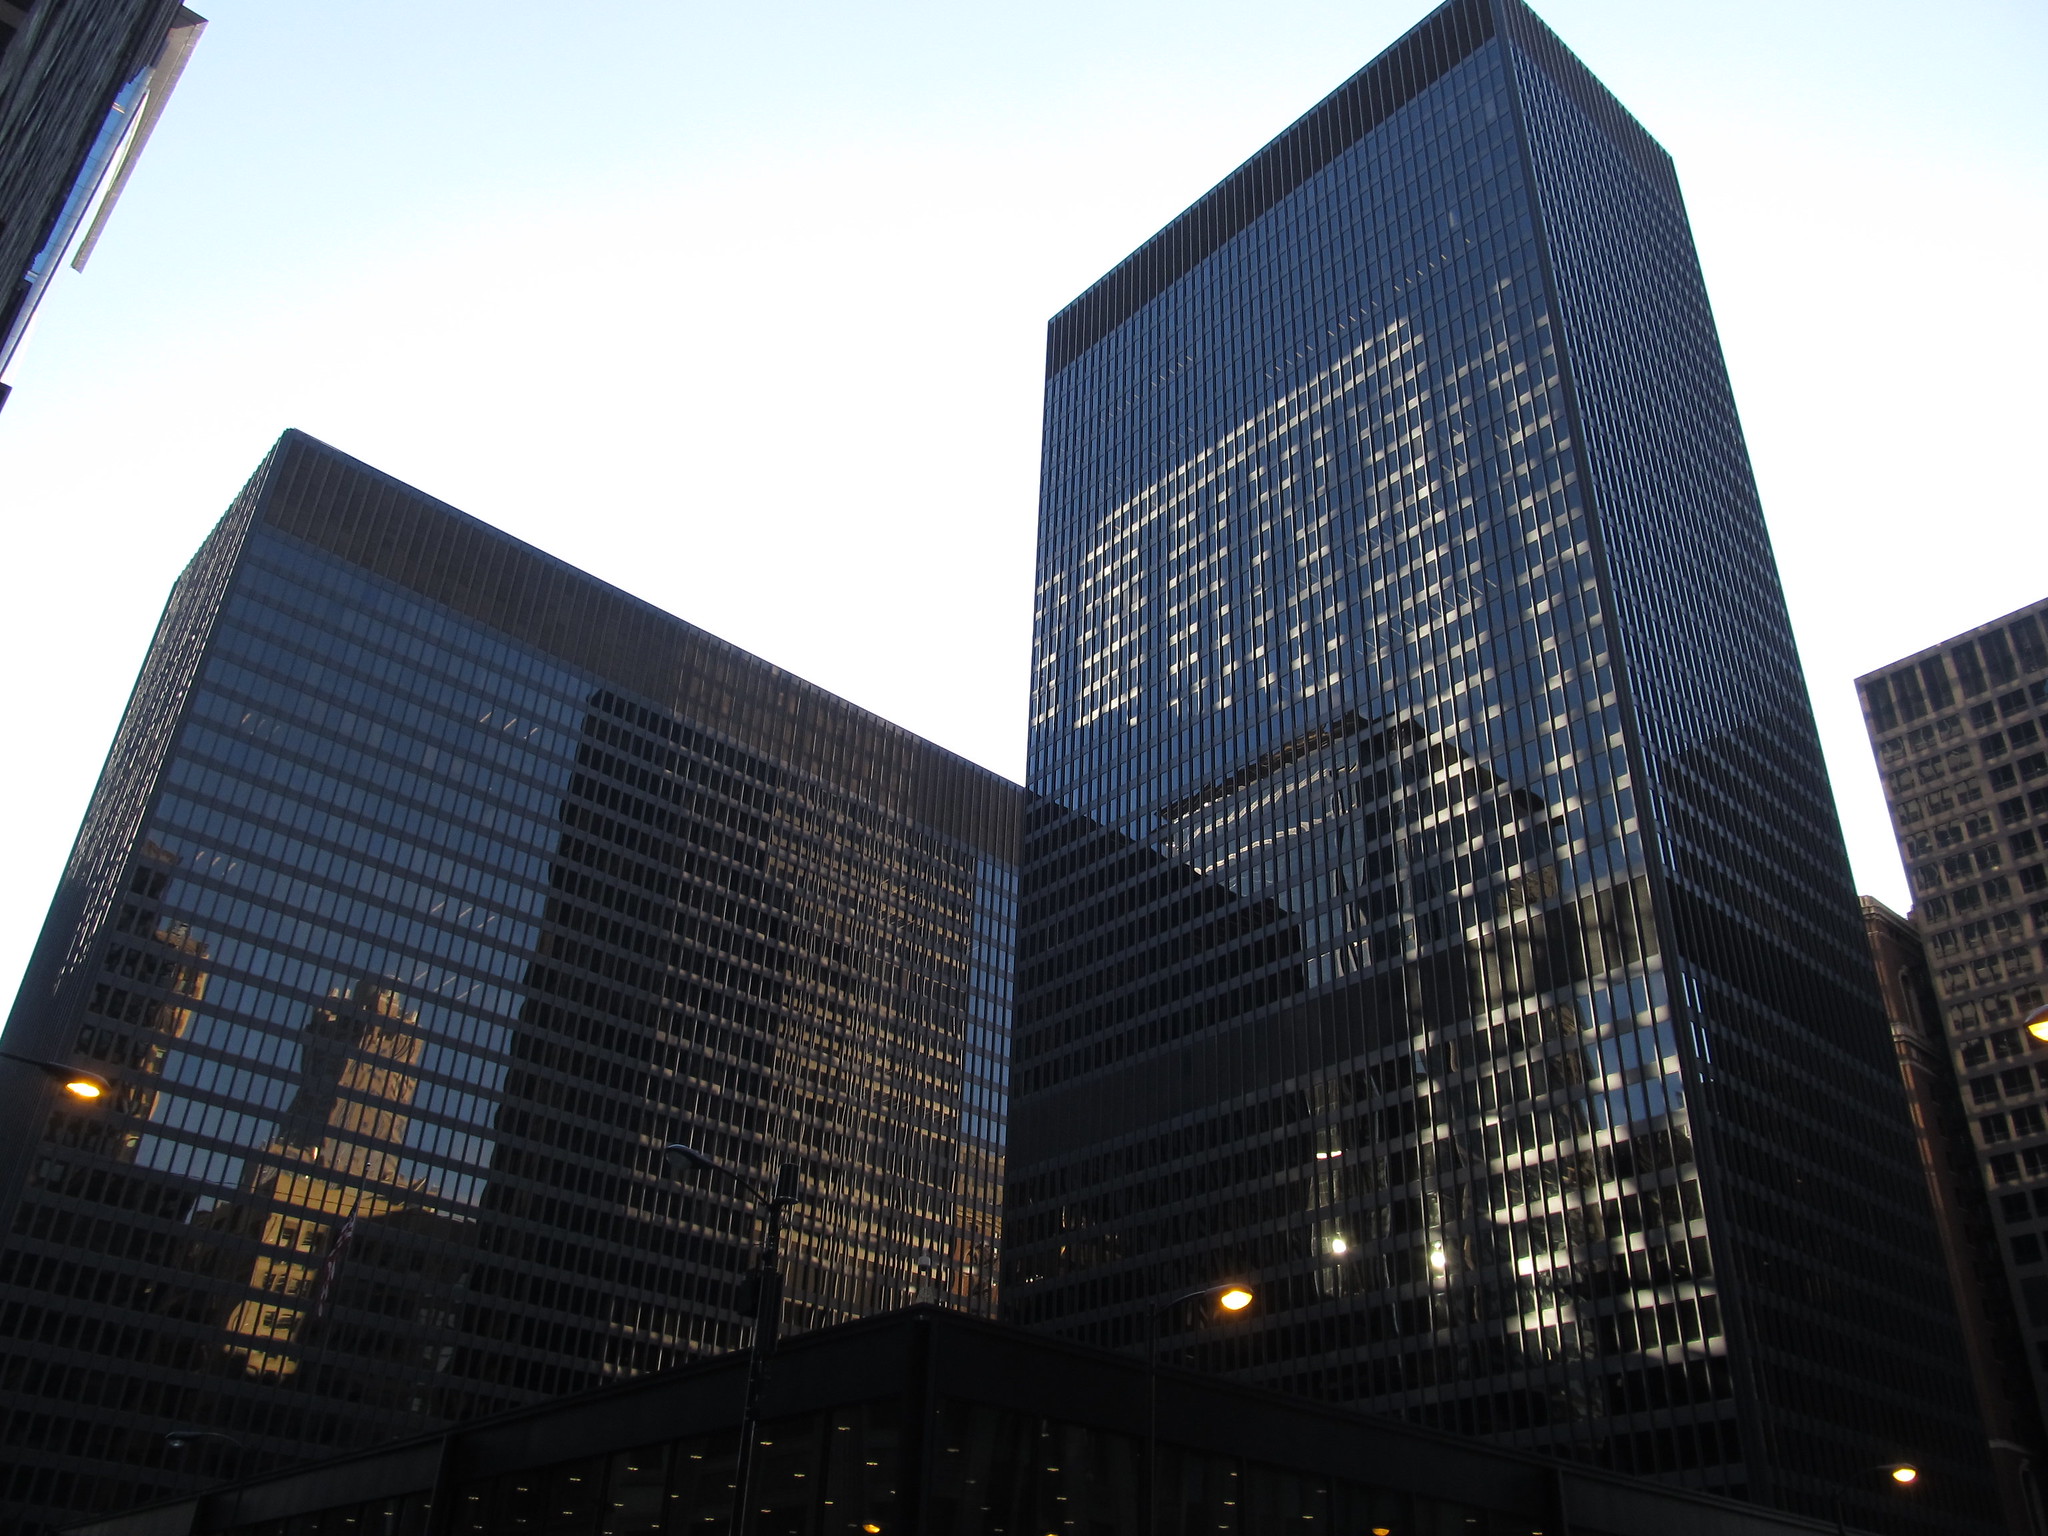 The Dirksen Federal Building in Chicago.